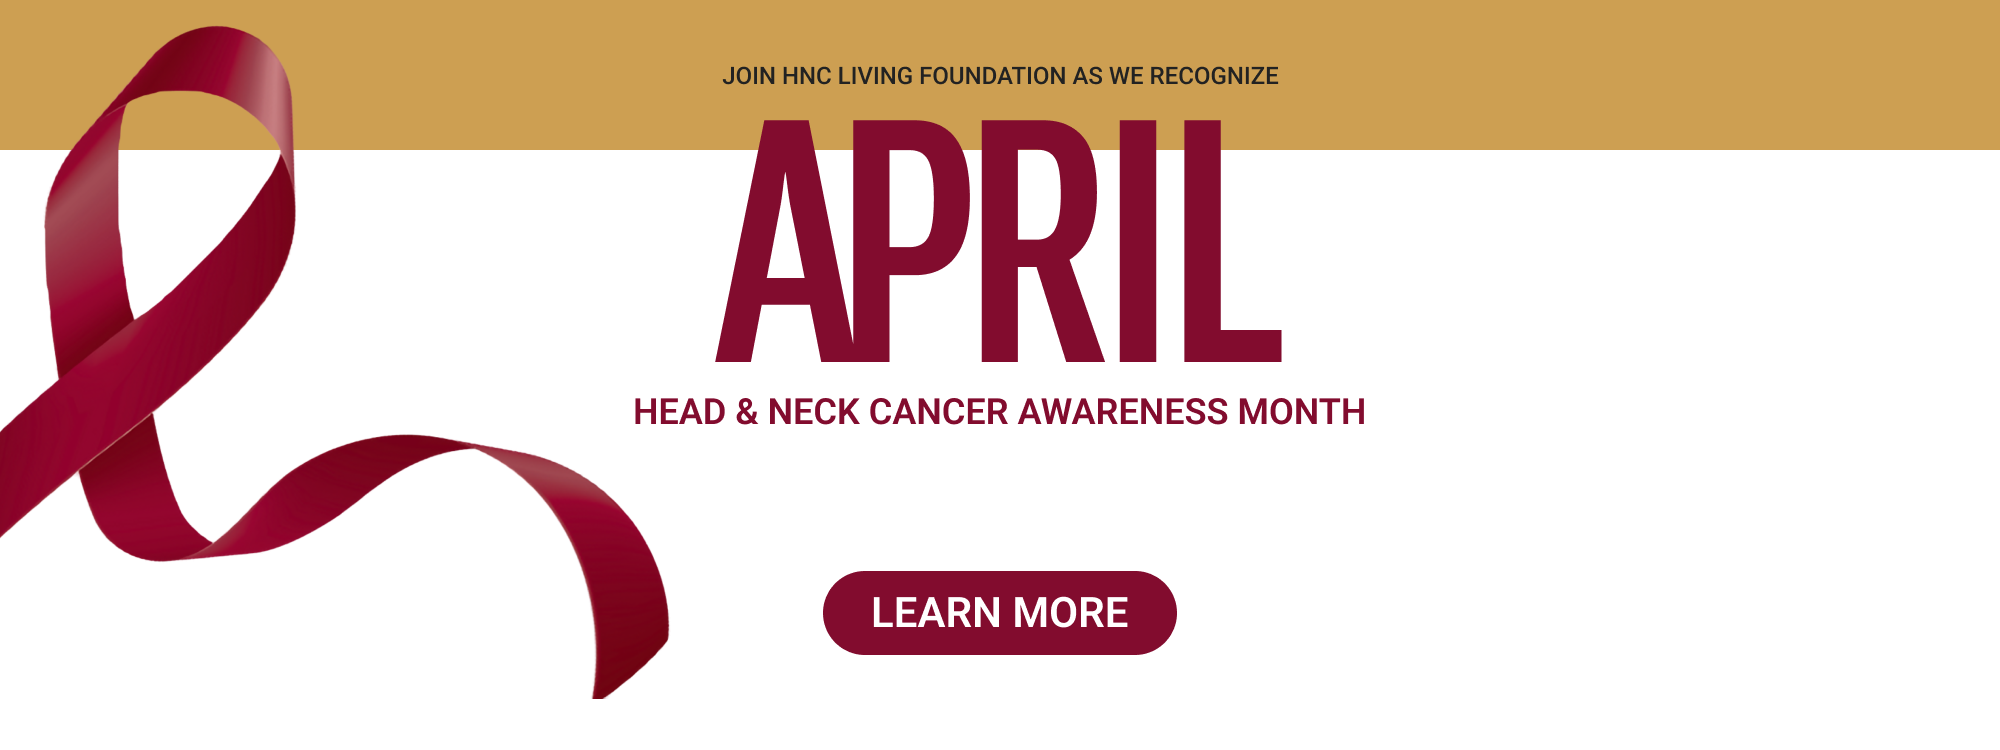 Head & Neck Cancer Awareness Month